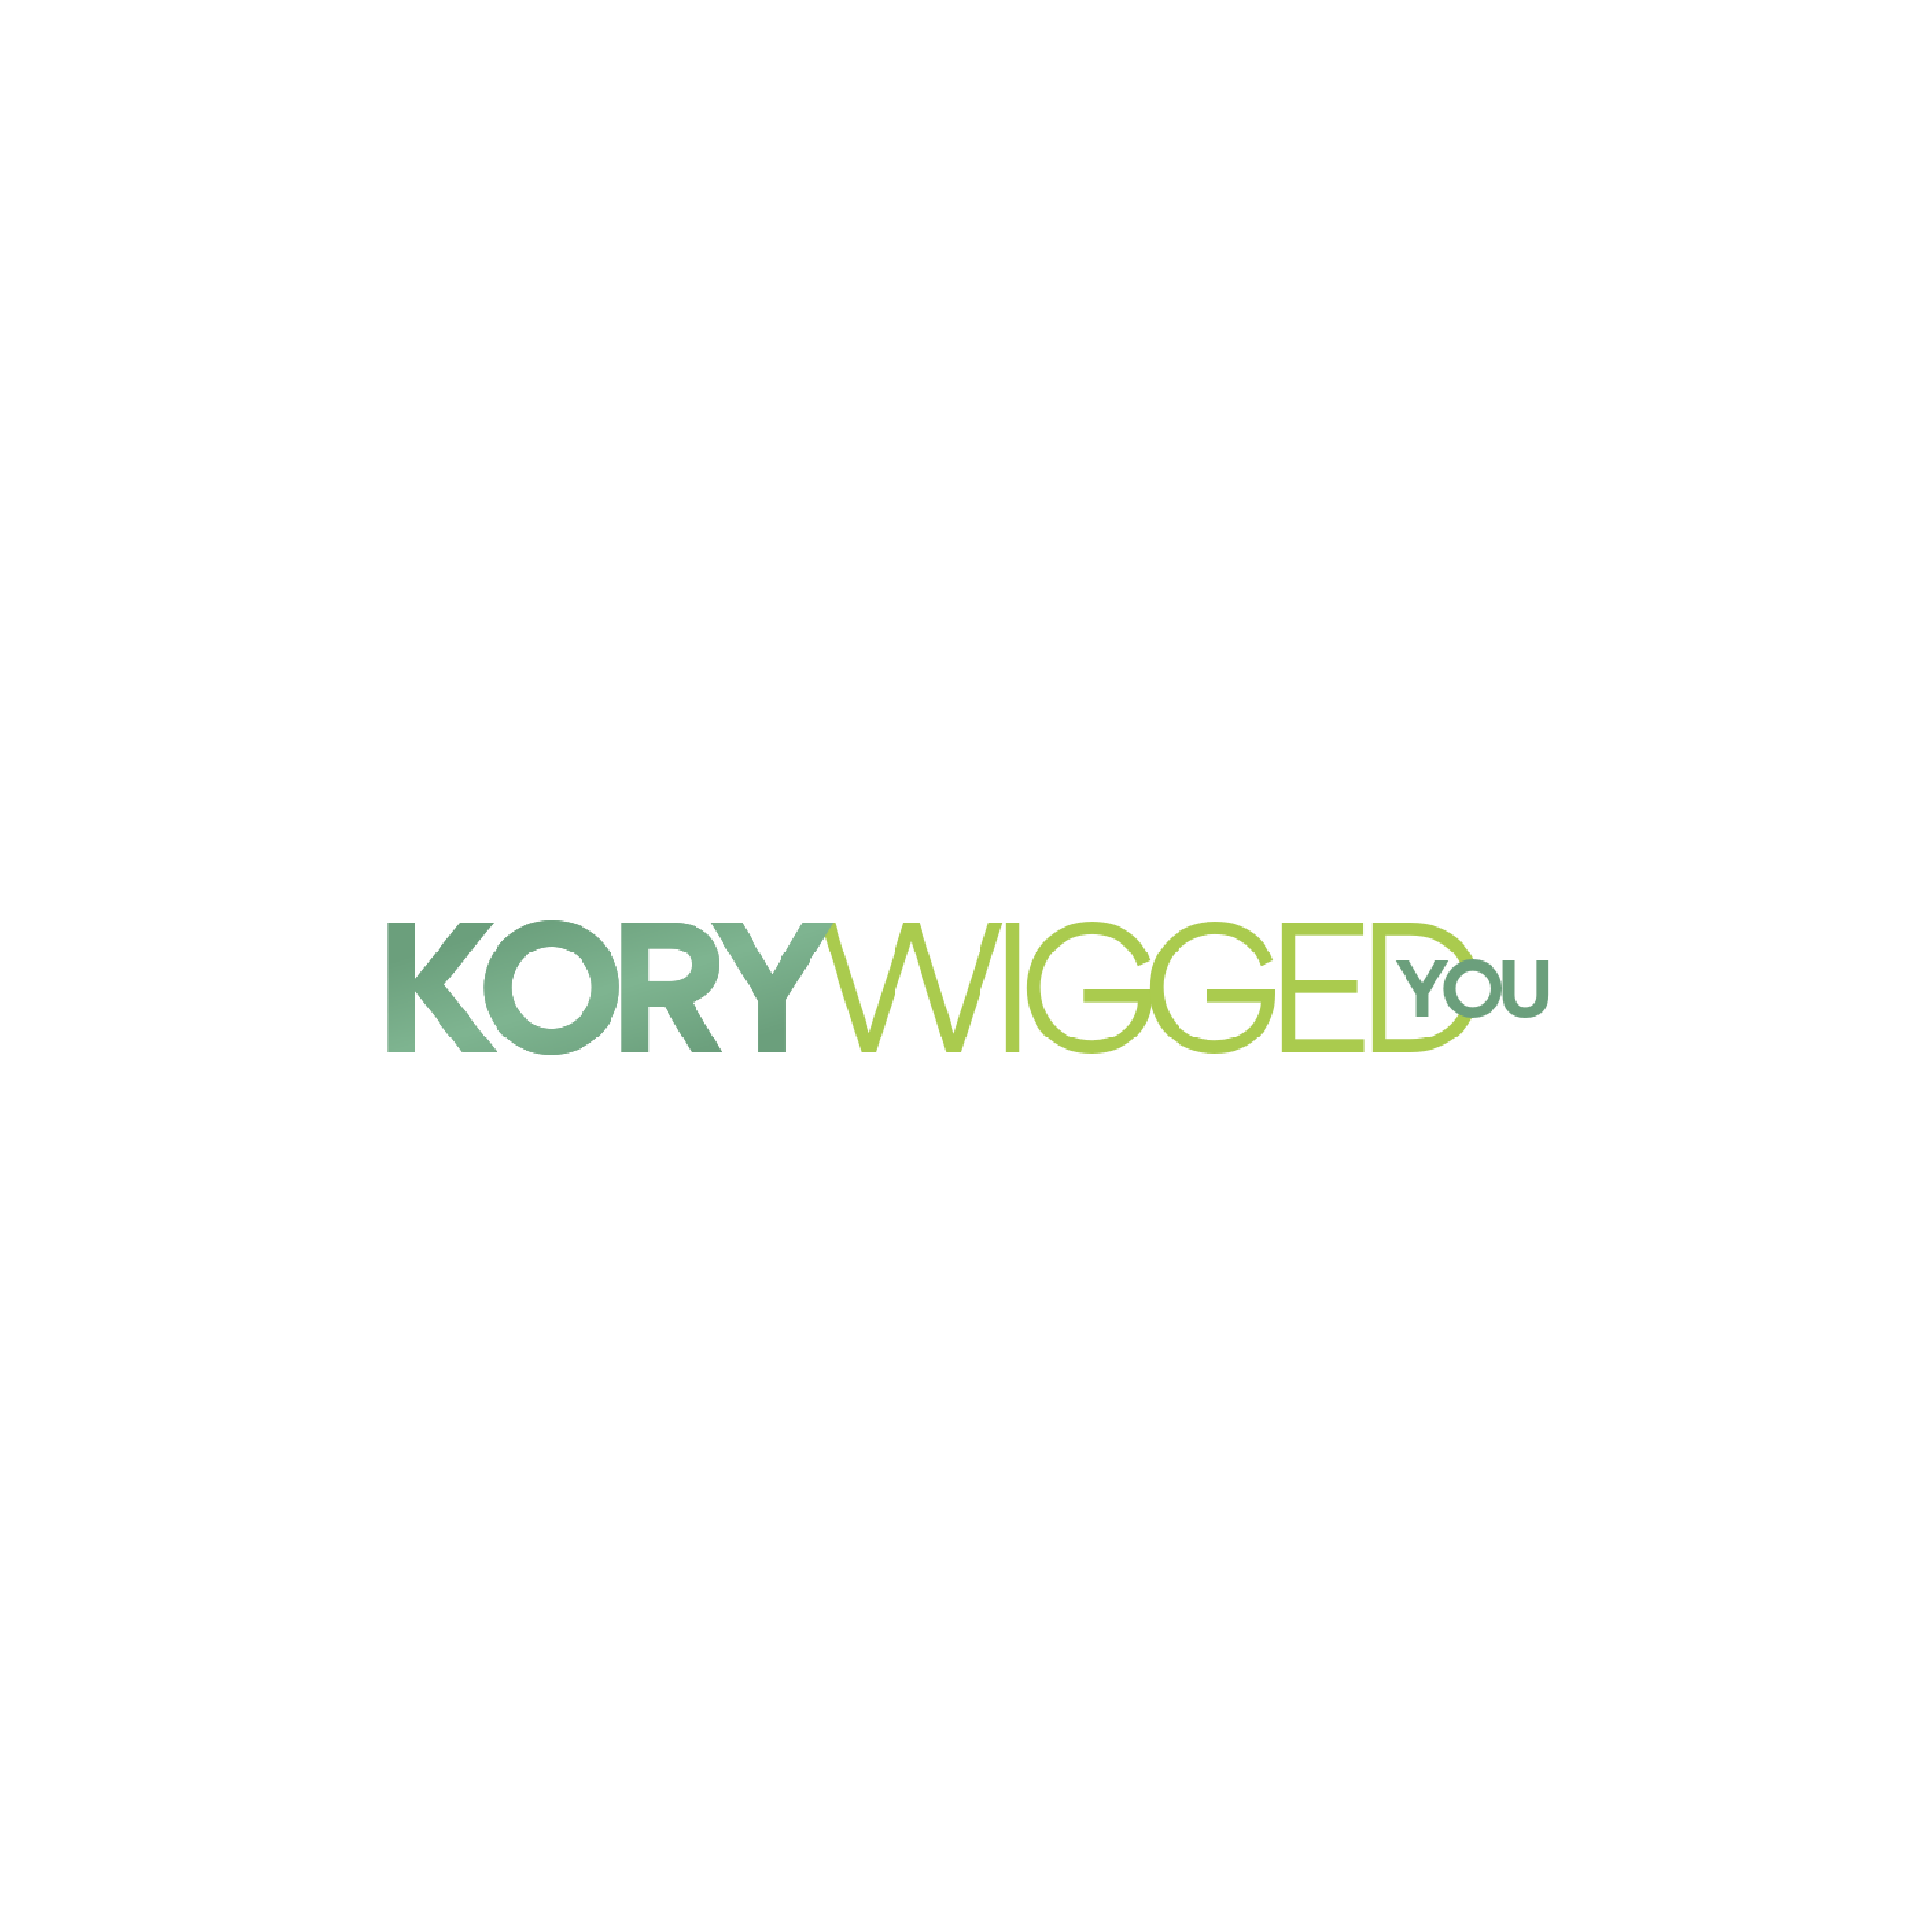 Kory Wigged You LLC